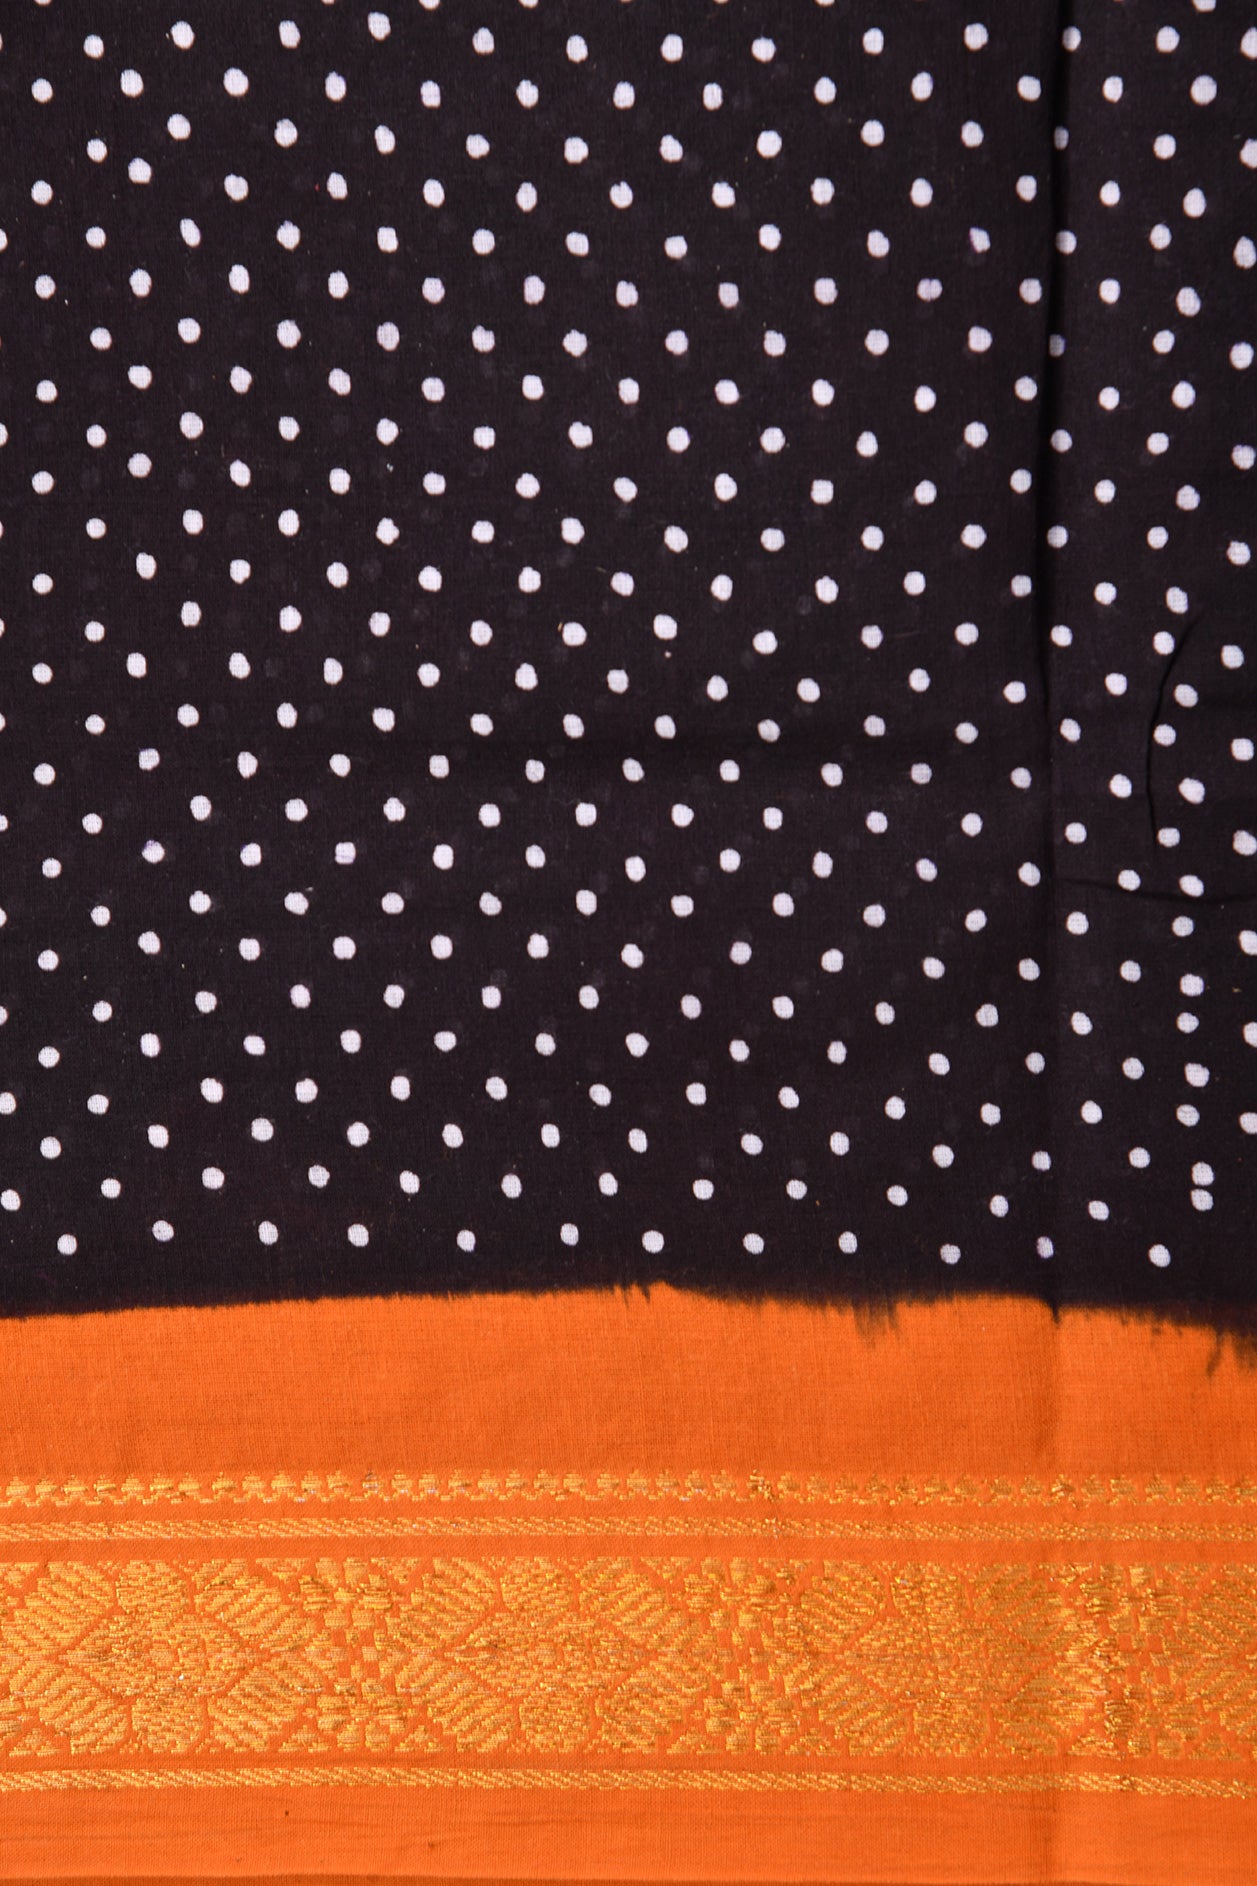 Polka Dots Black Sungudi Cotton Saree